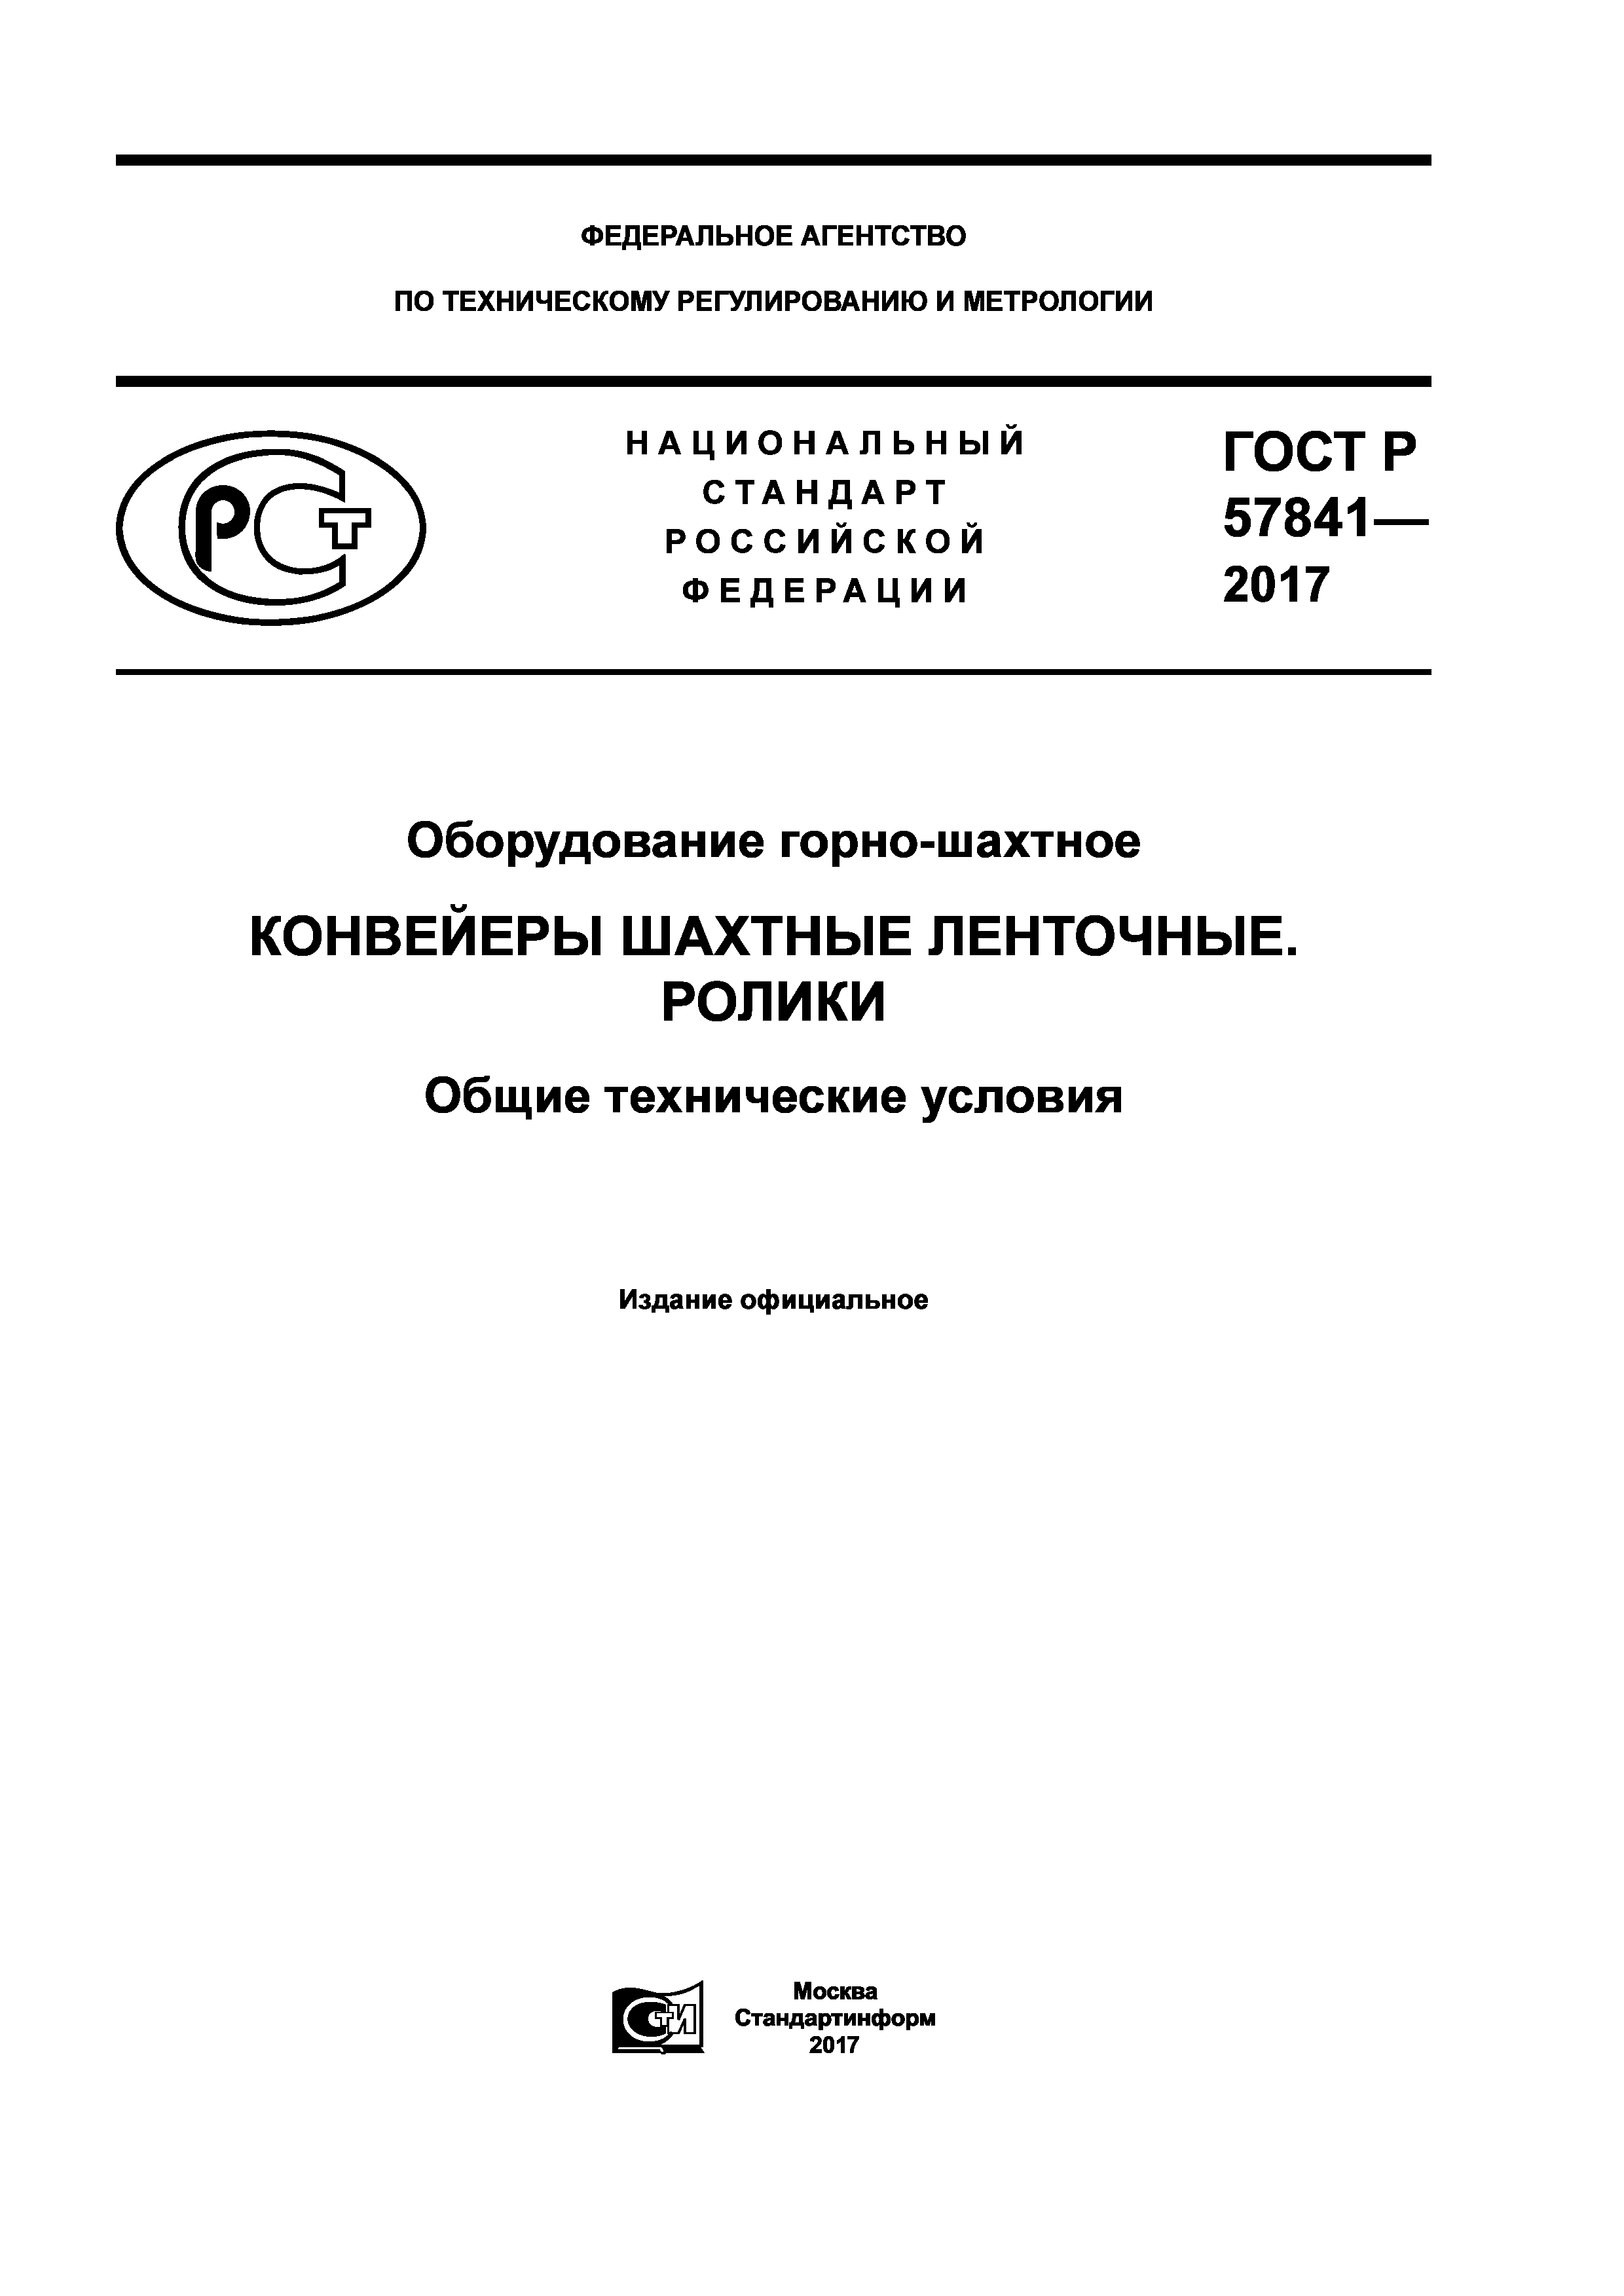 ГОСТ Р 57841-2017